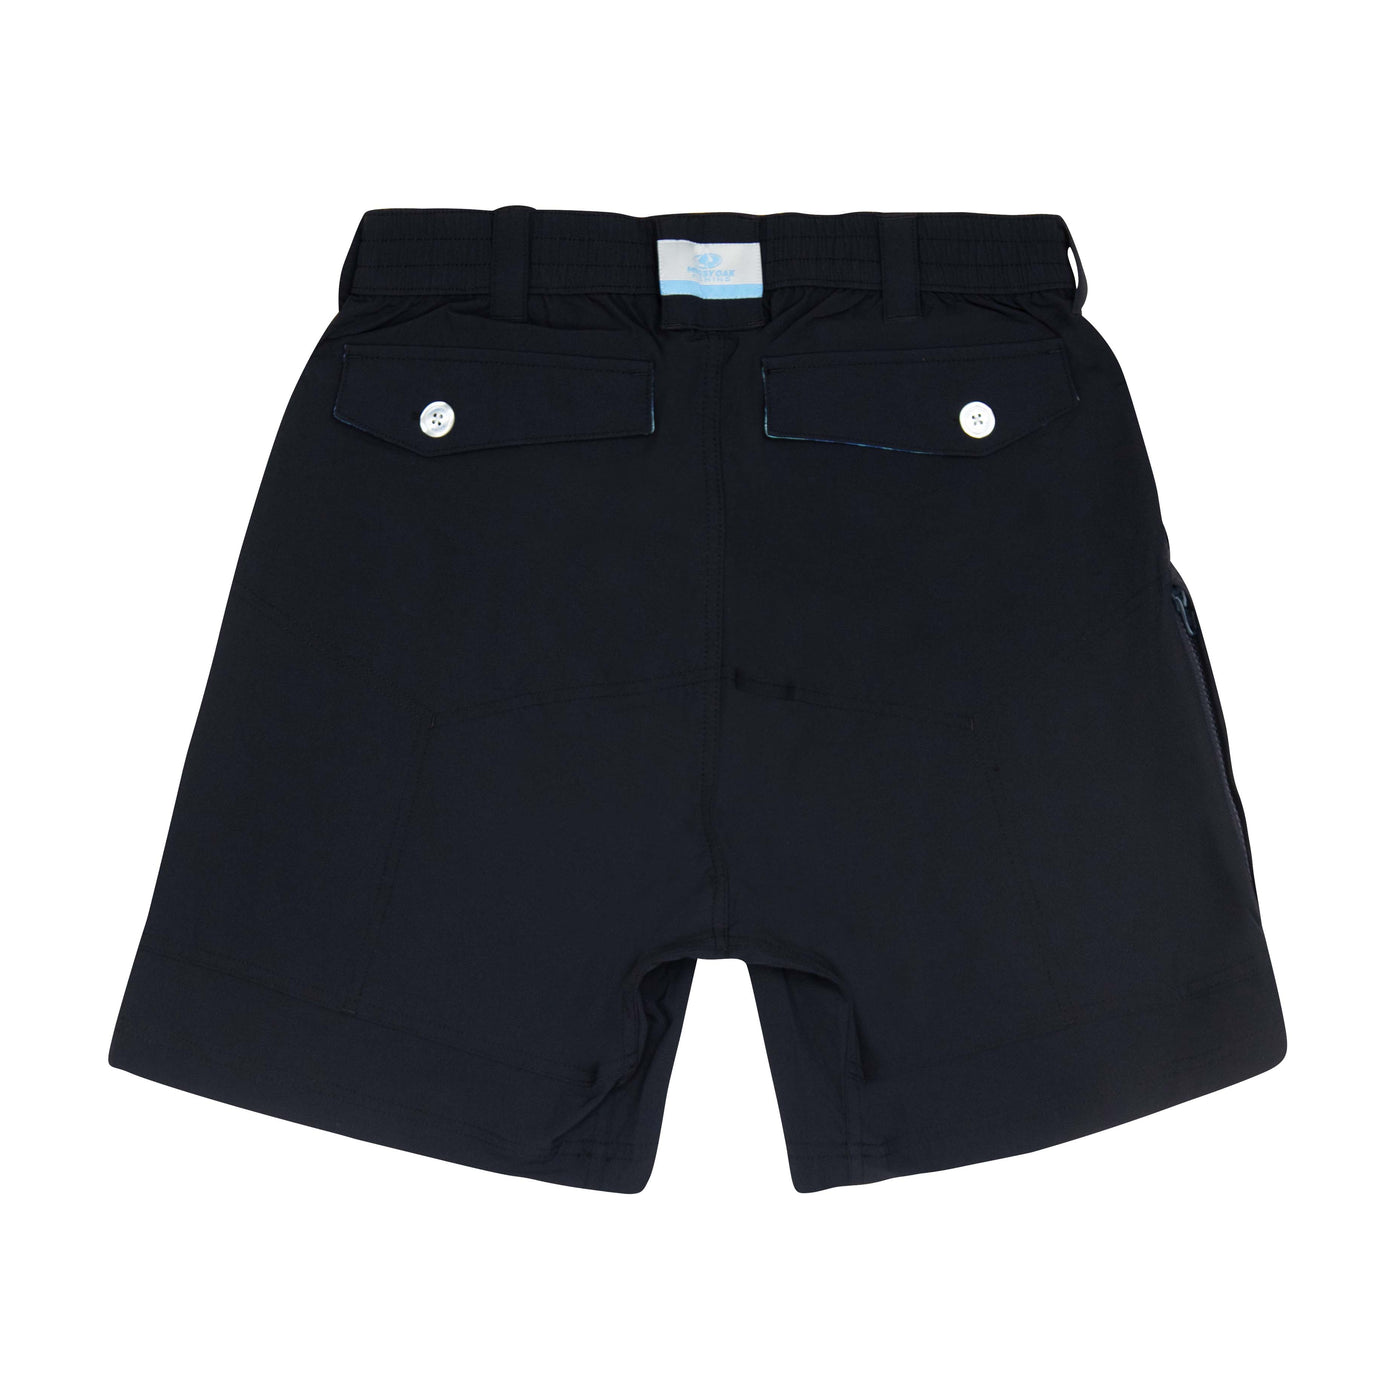 Mossy Oak XTR Mens Fishing Shorts Quick Dry & Wicking Shorts: Buy